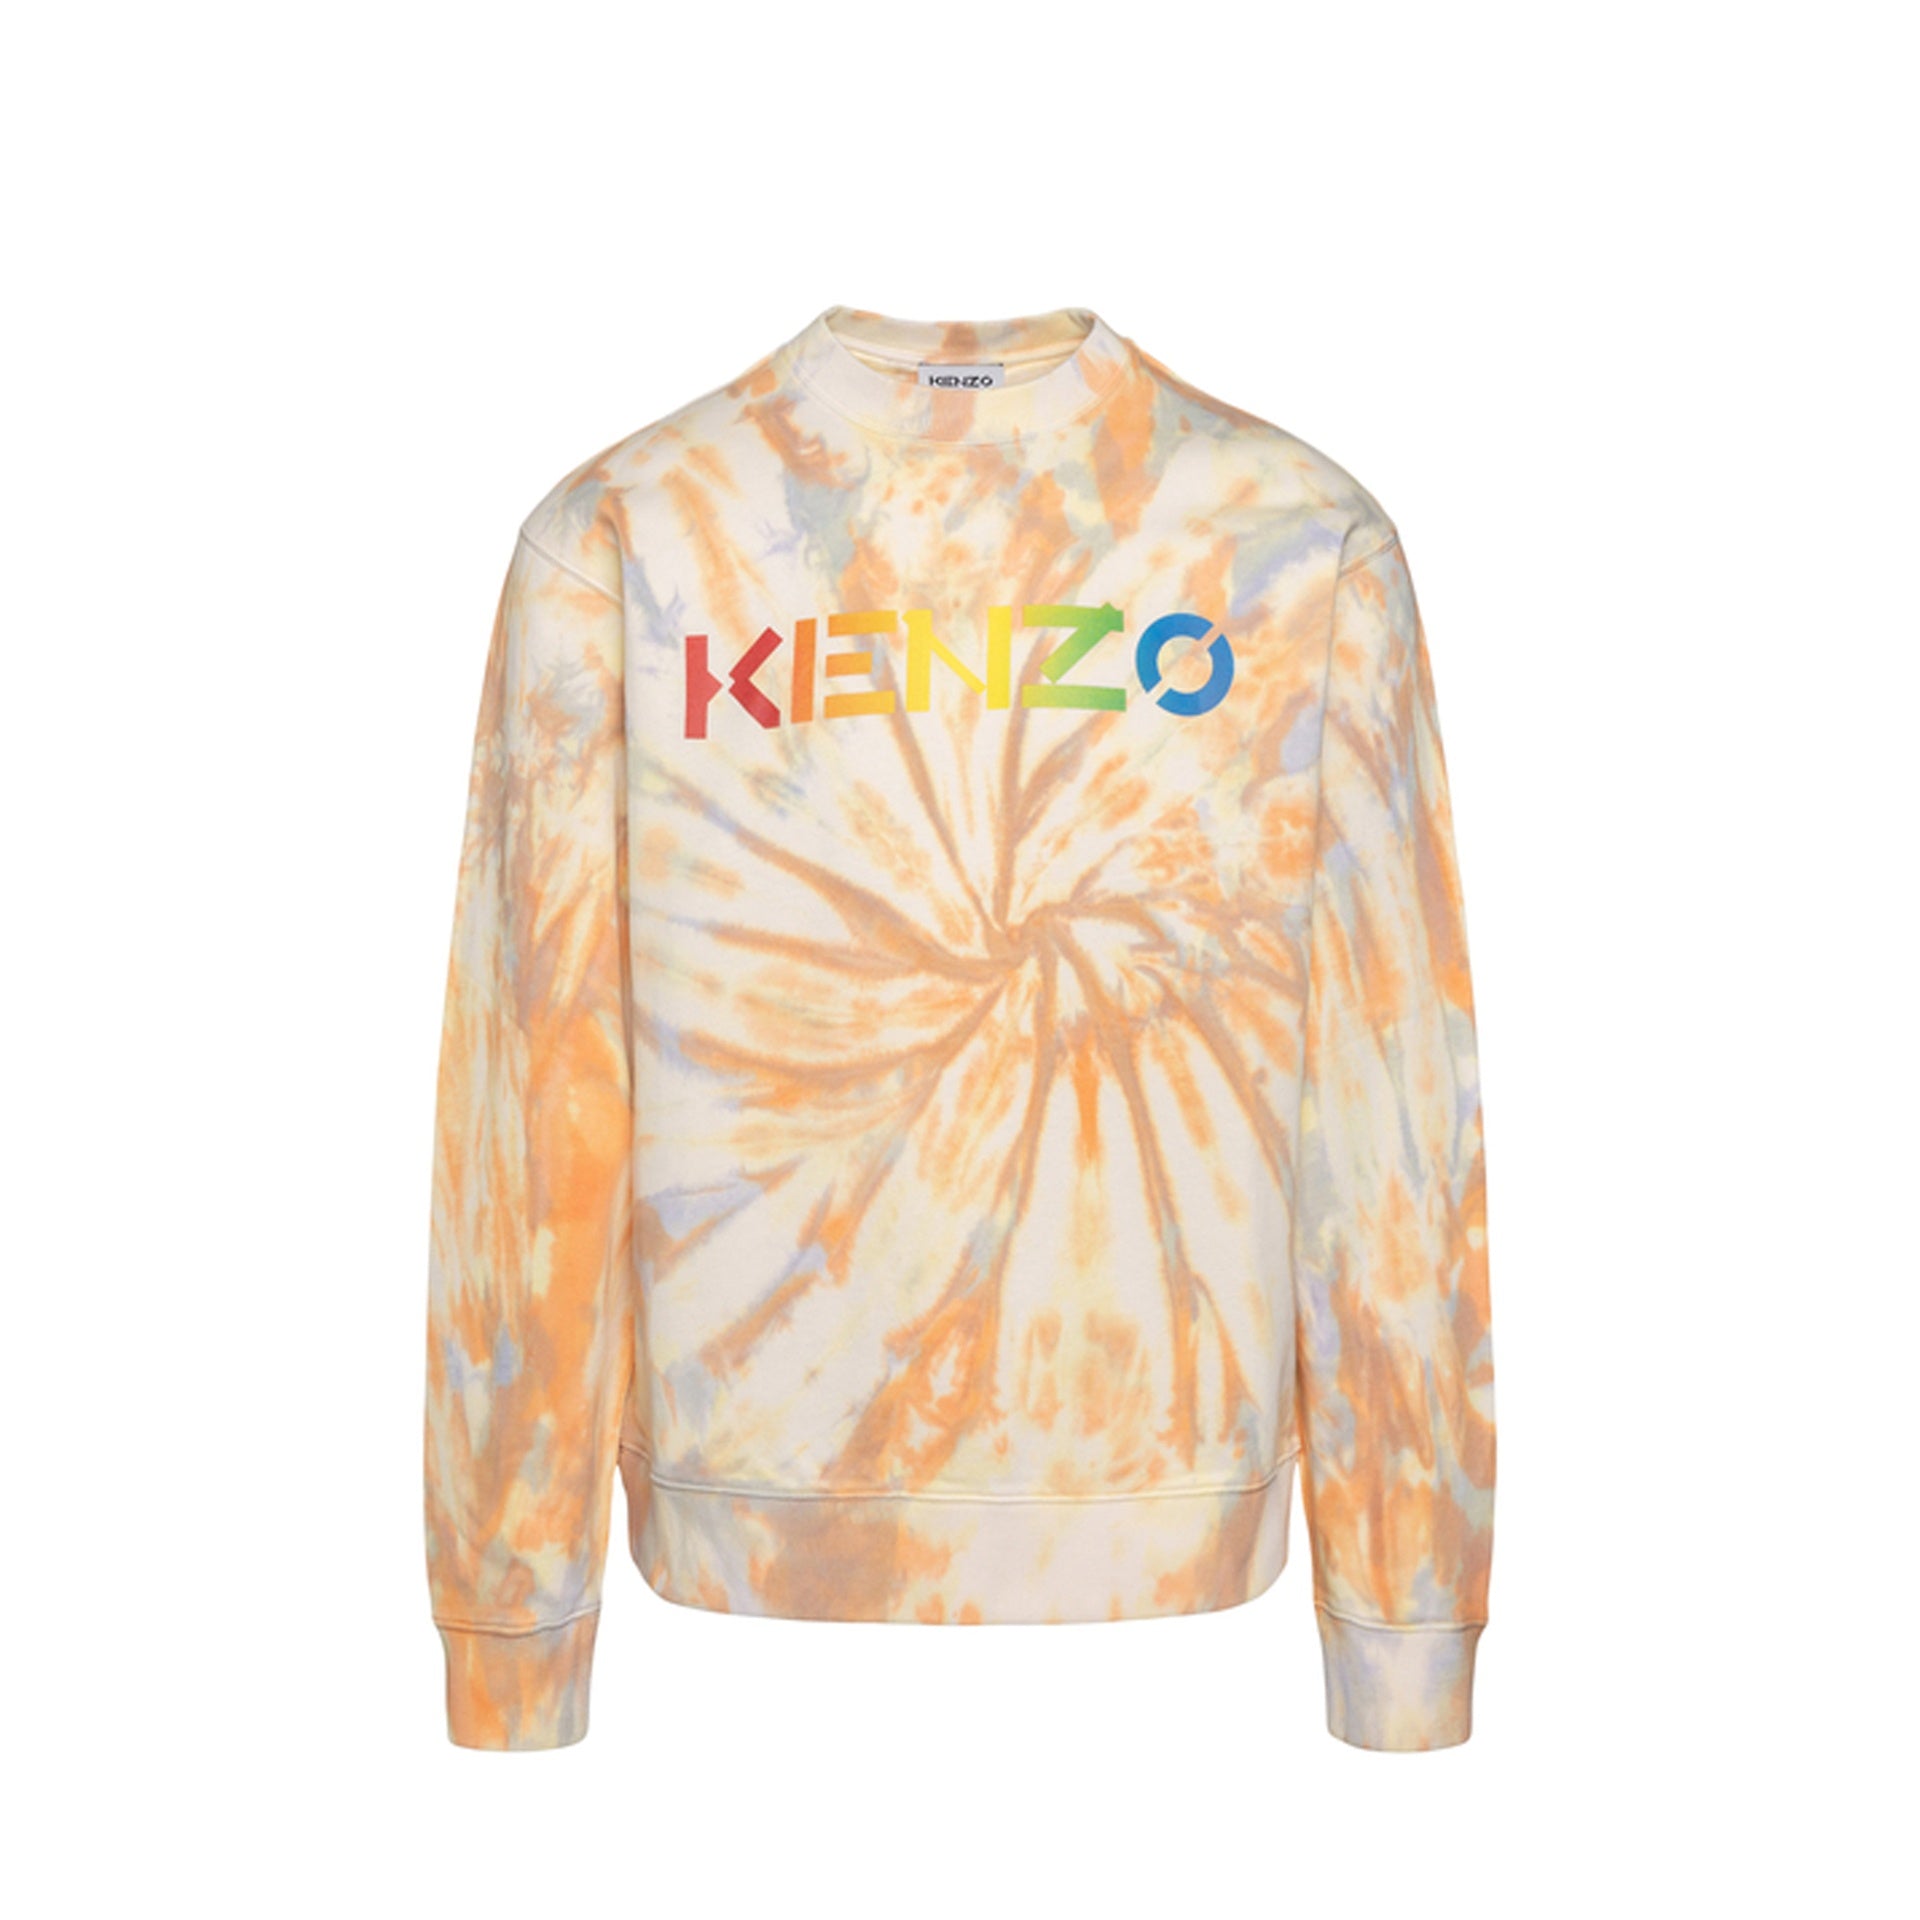 KENZO-OUTLET-SALE-Kenzo-Cotton-Logo-Sweatshirt-Shirts-ORANGE-M-ARCHIVE-COLLECTION.jpg